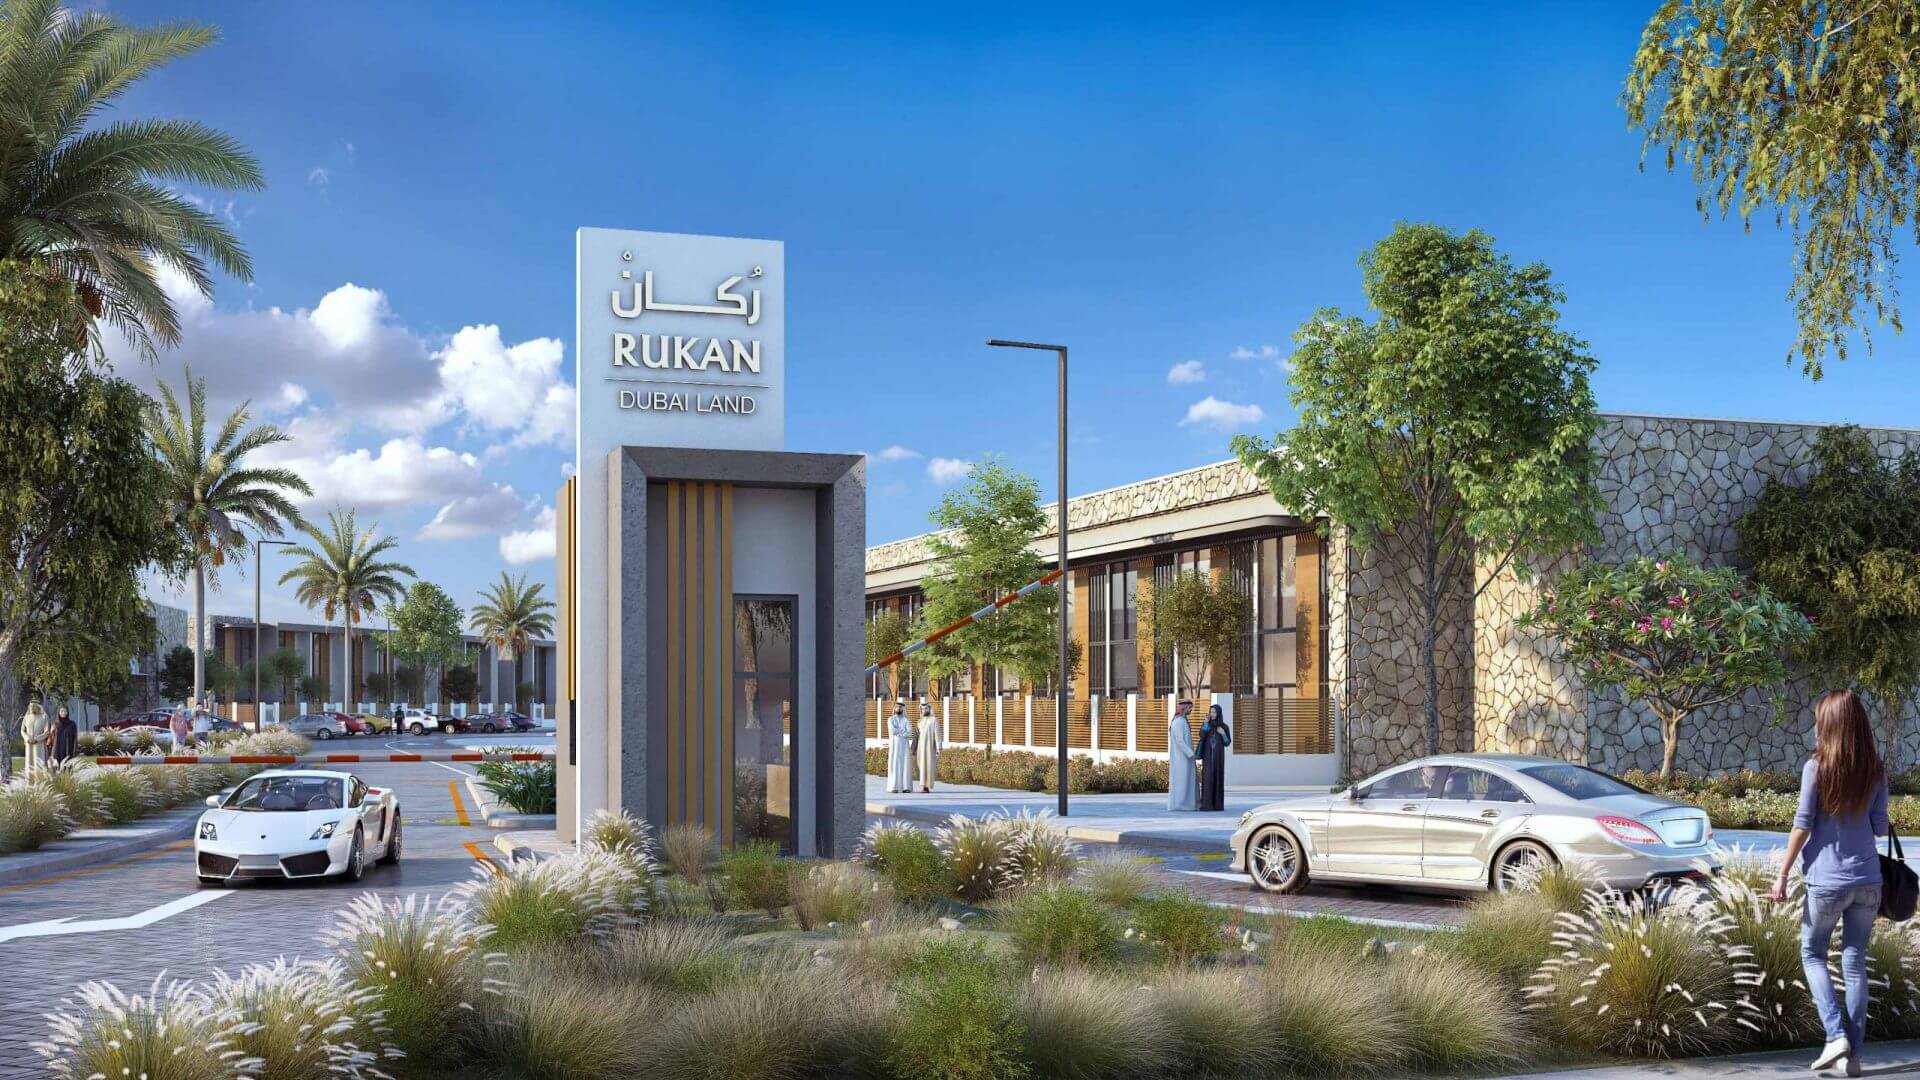 RUKAN LOFTS by Reportage Properties LLC in Rukan, Dubai